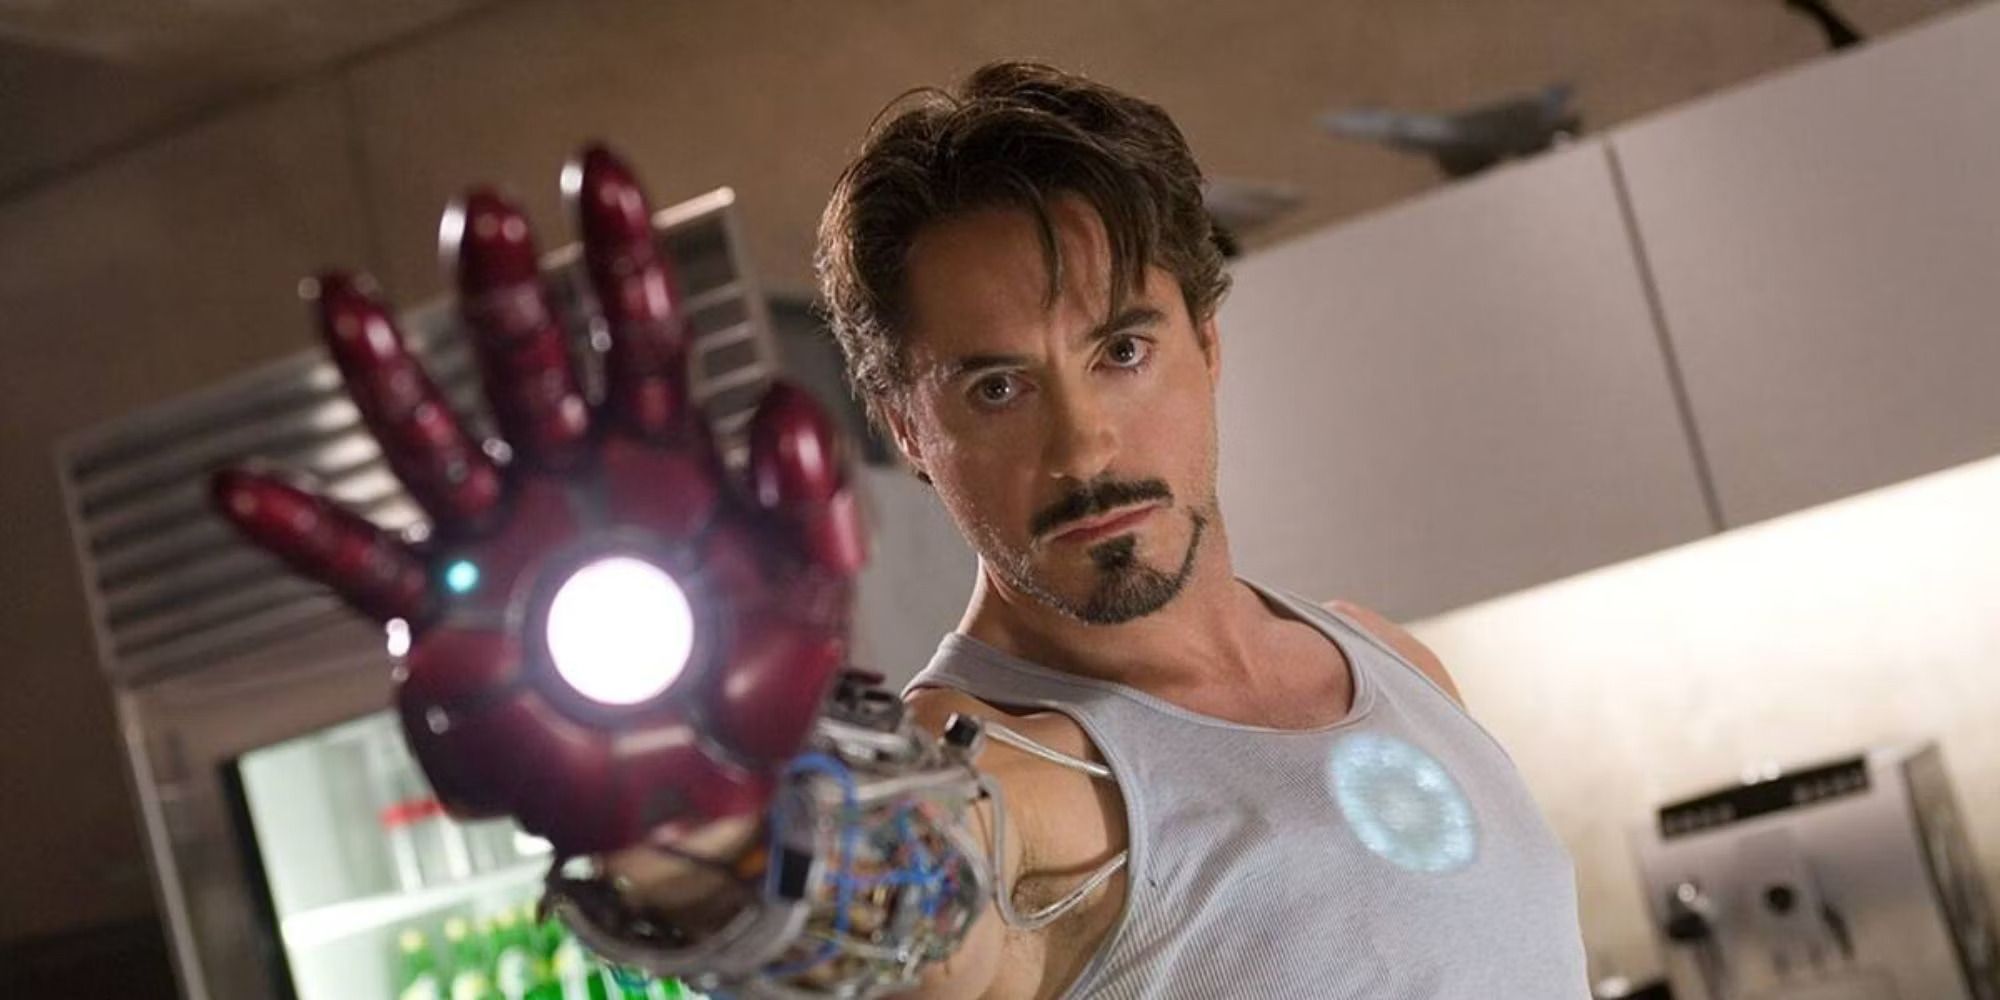 Robert Downey Jr. as Tony Stark tests his equipment in Iron Man